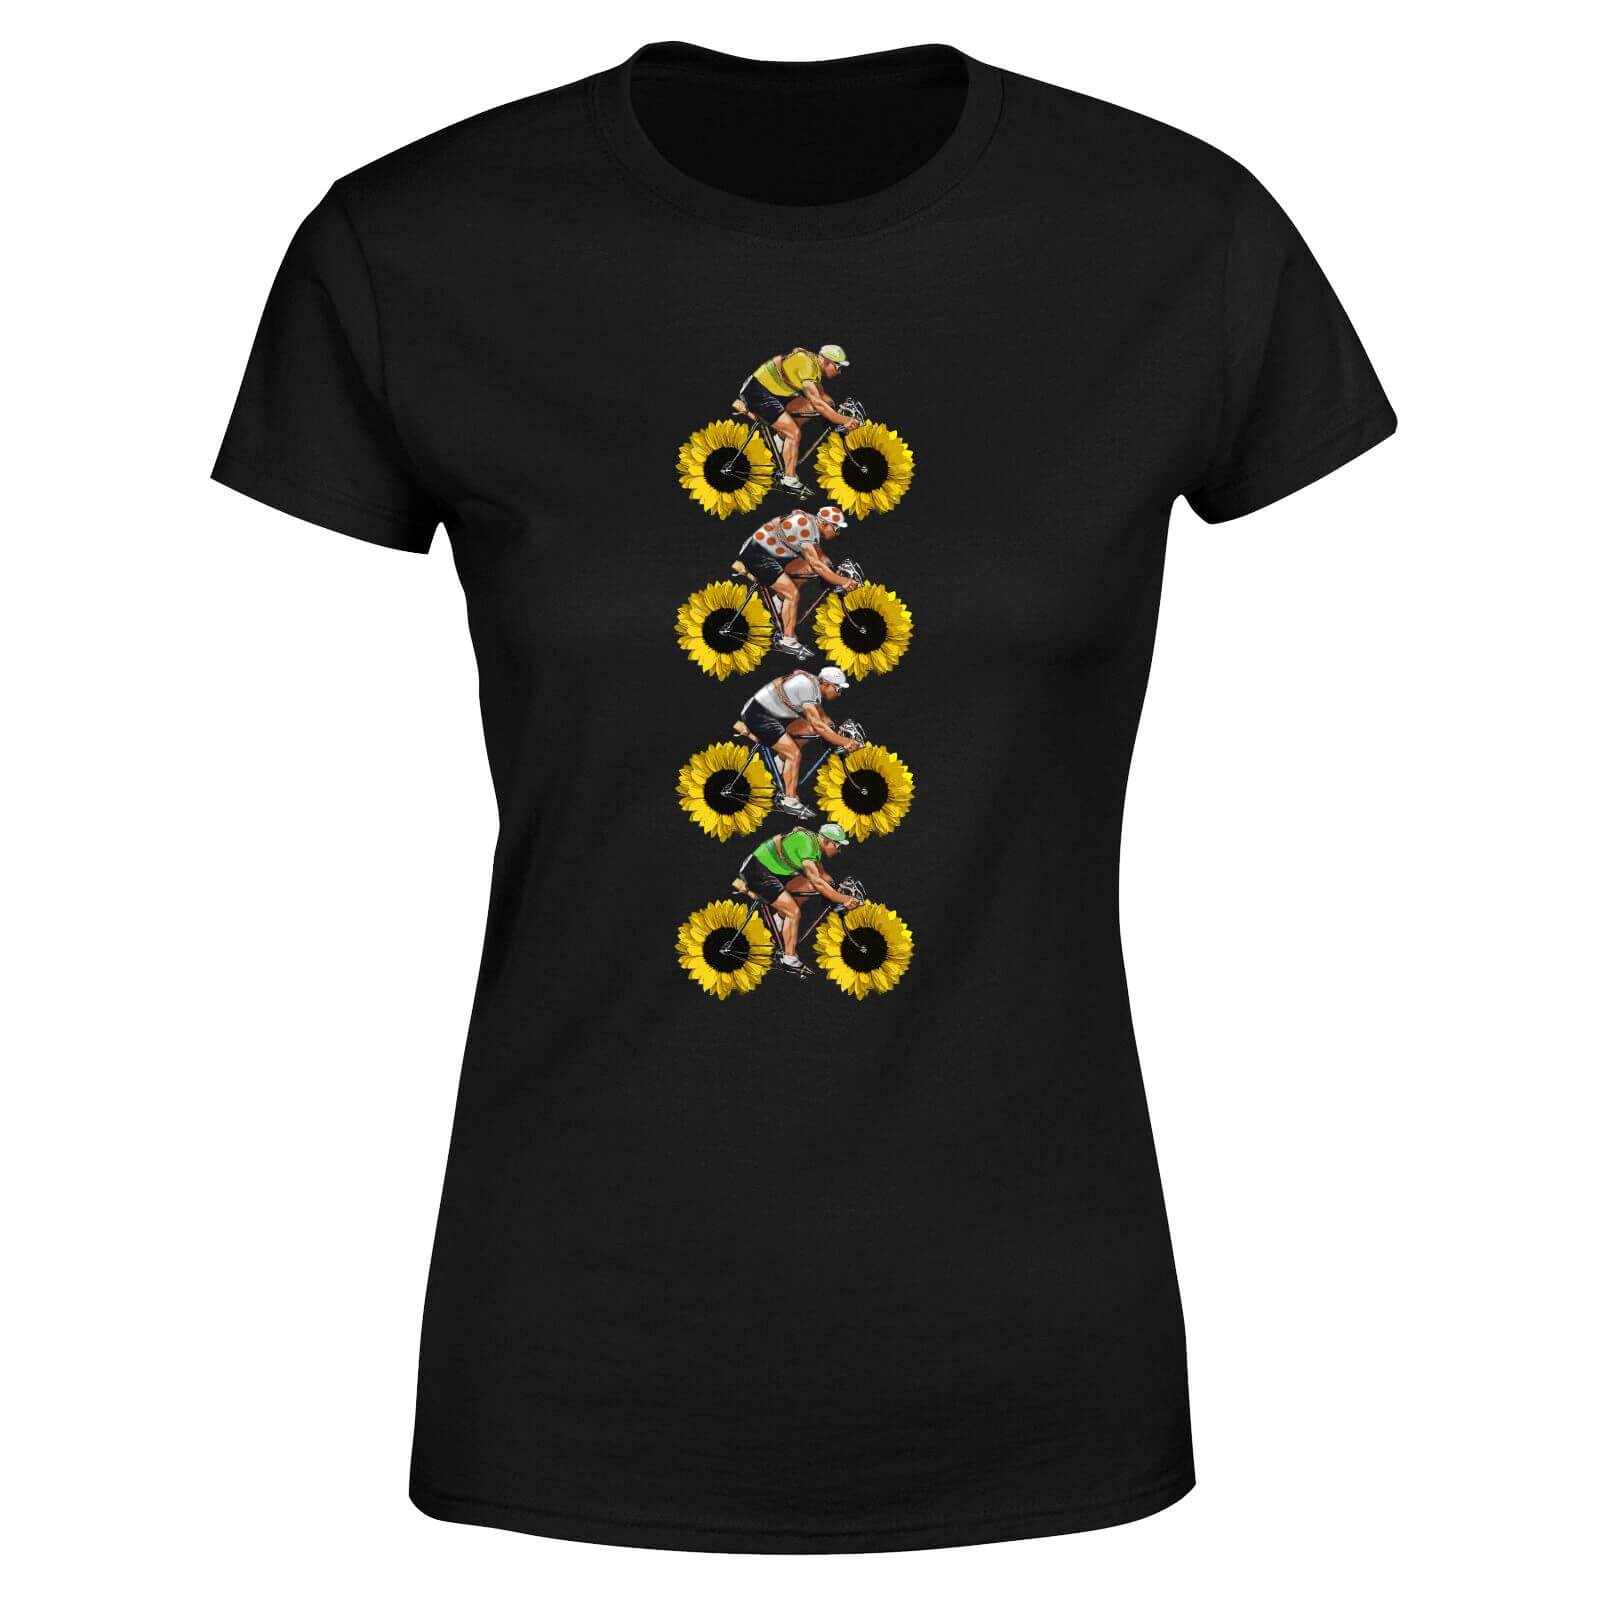 Tournesol Riders Women's T-Shirt - Black - S - Black